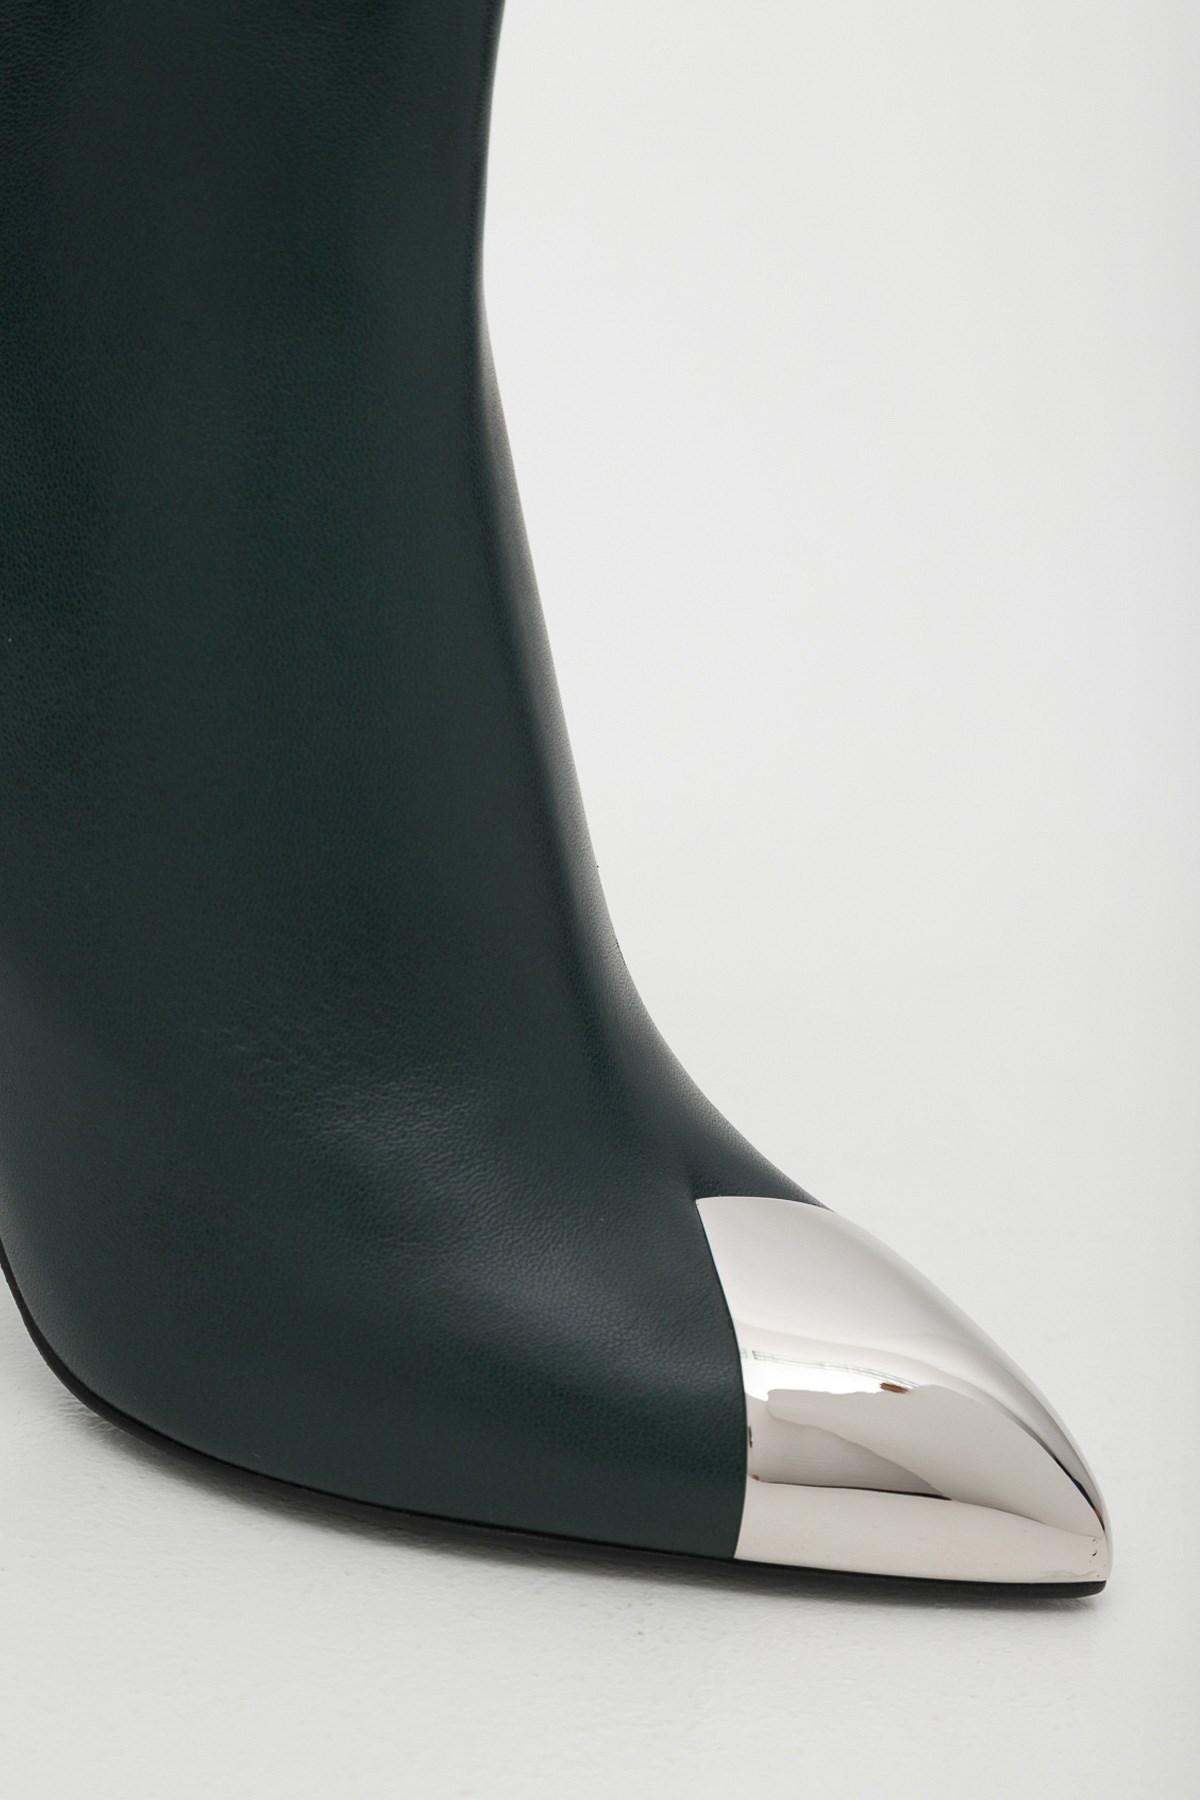 Celine Leather Triangle Heel Boot With Metallic Toe Cap in Green 